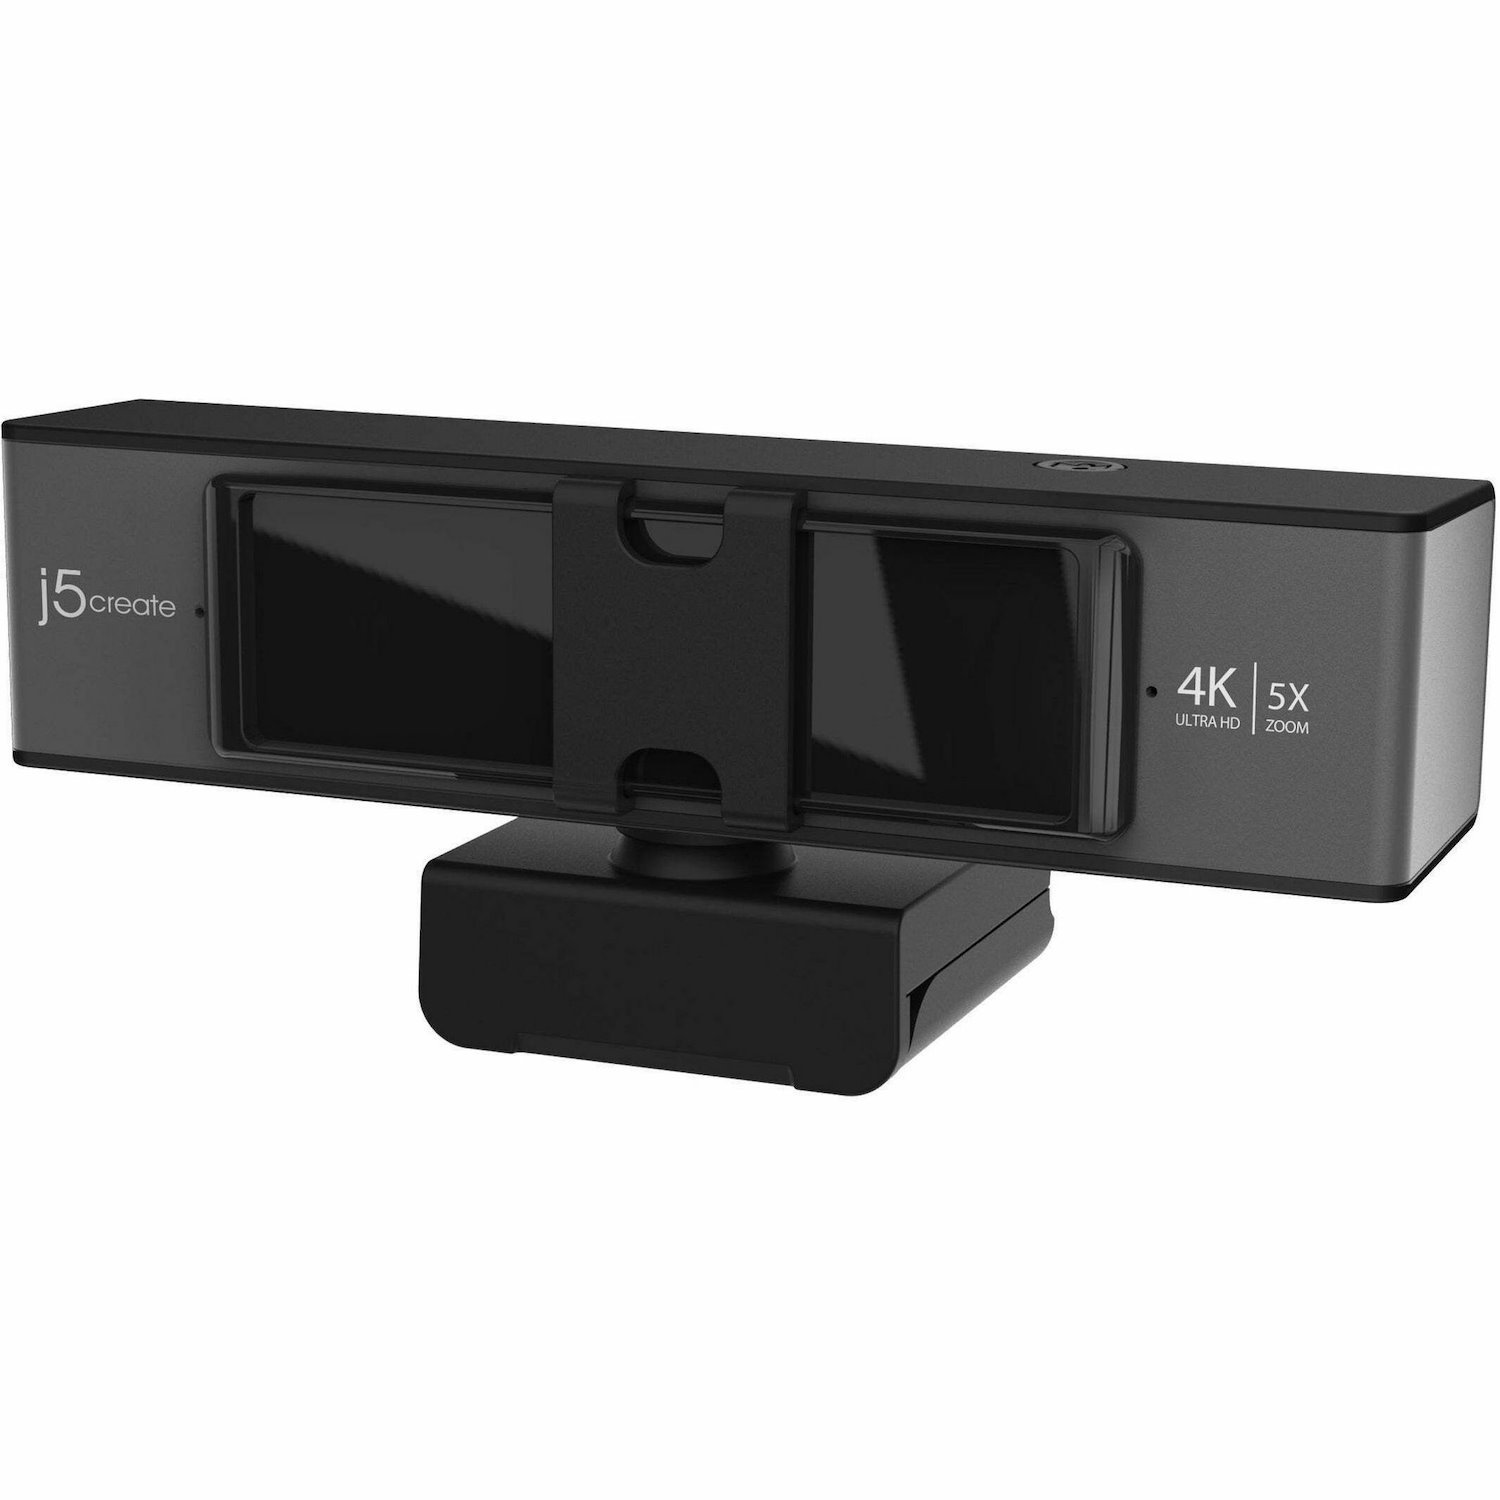 j5create JVCU435 Webcam - 8 Megapixel - 30 fps - Black, Silver - USB 2.0 Type A - 1 Pack(s)